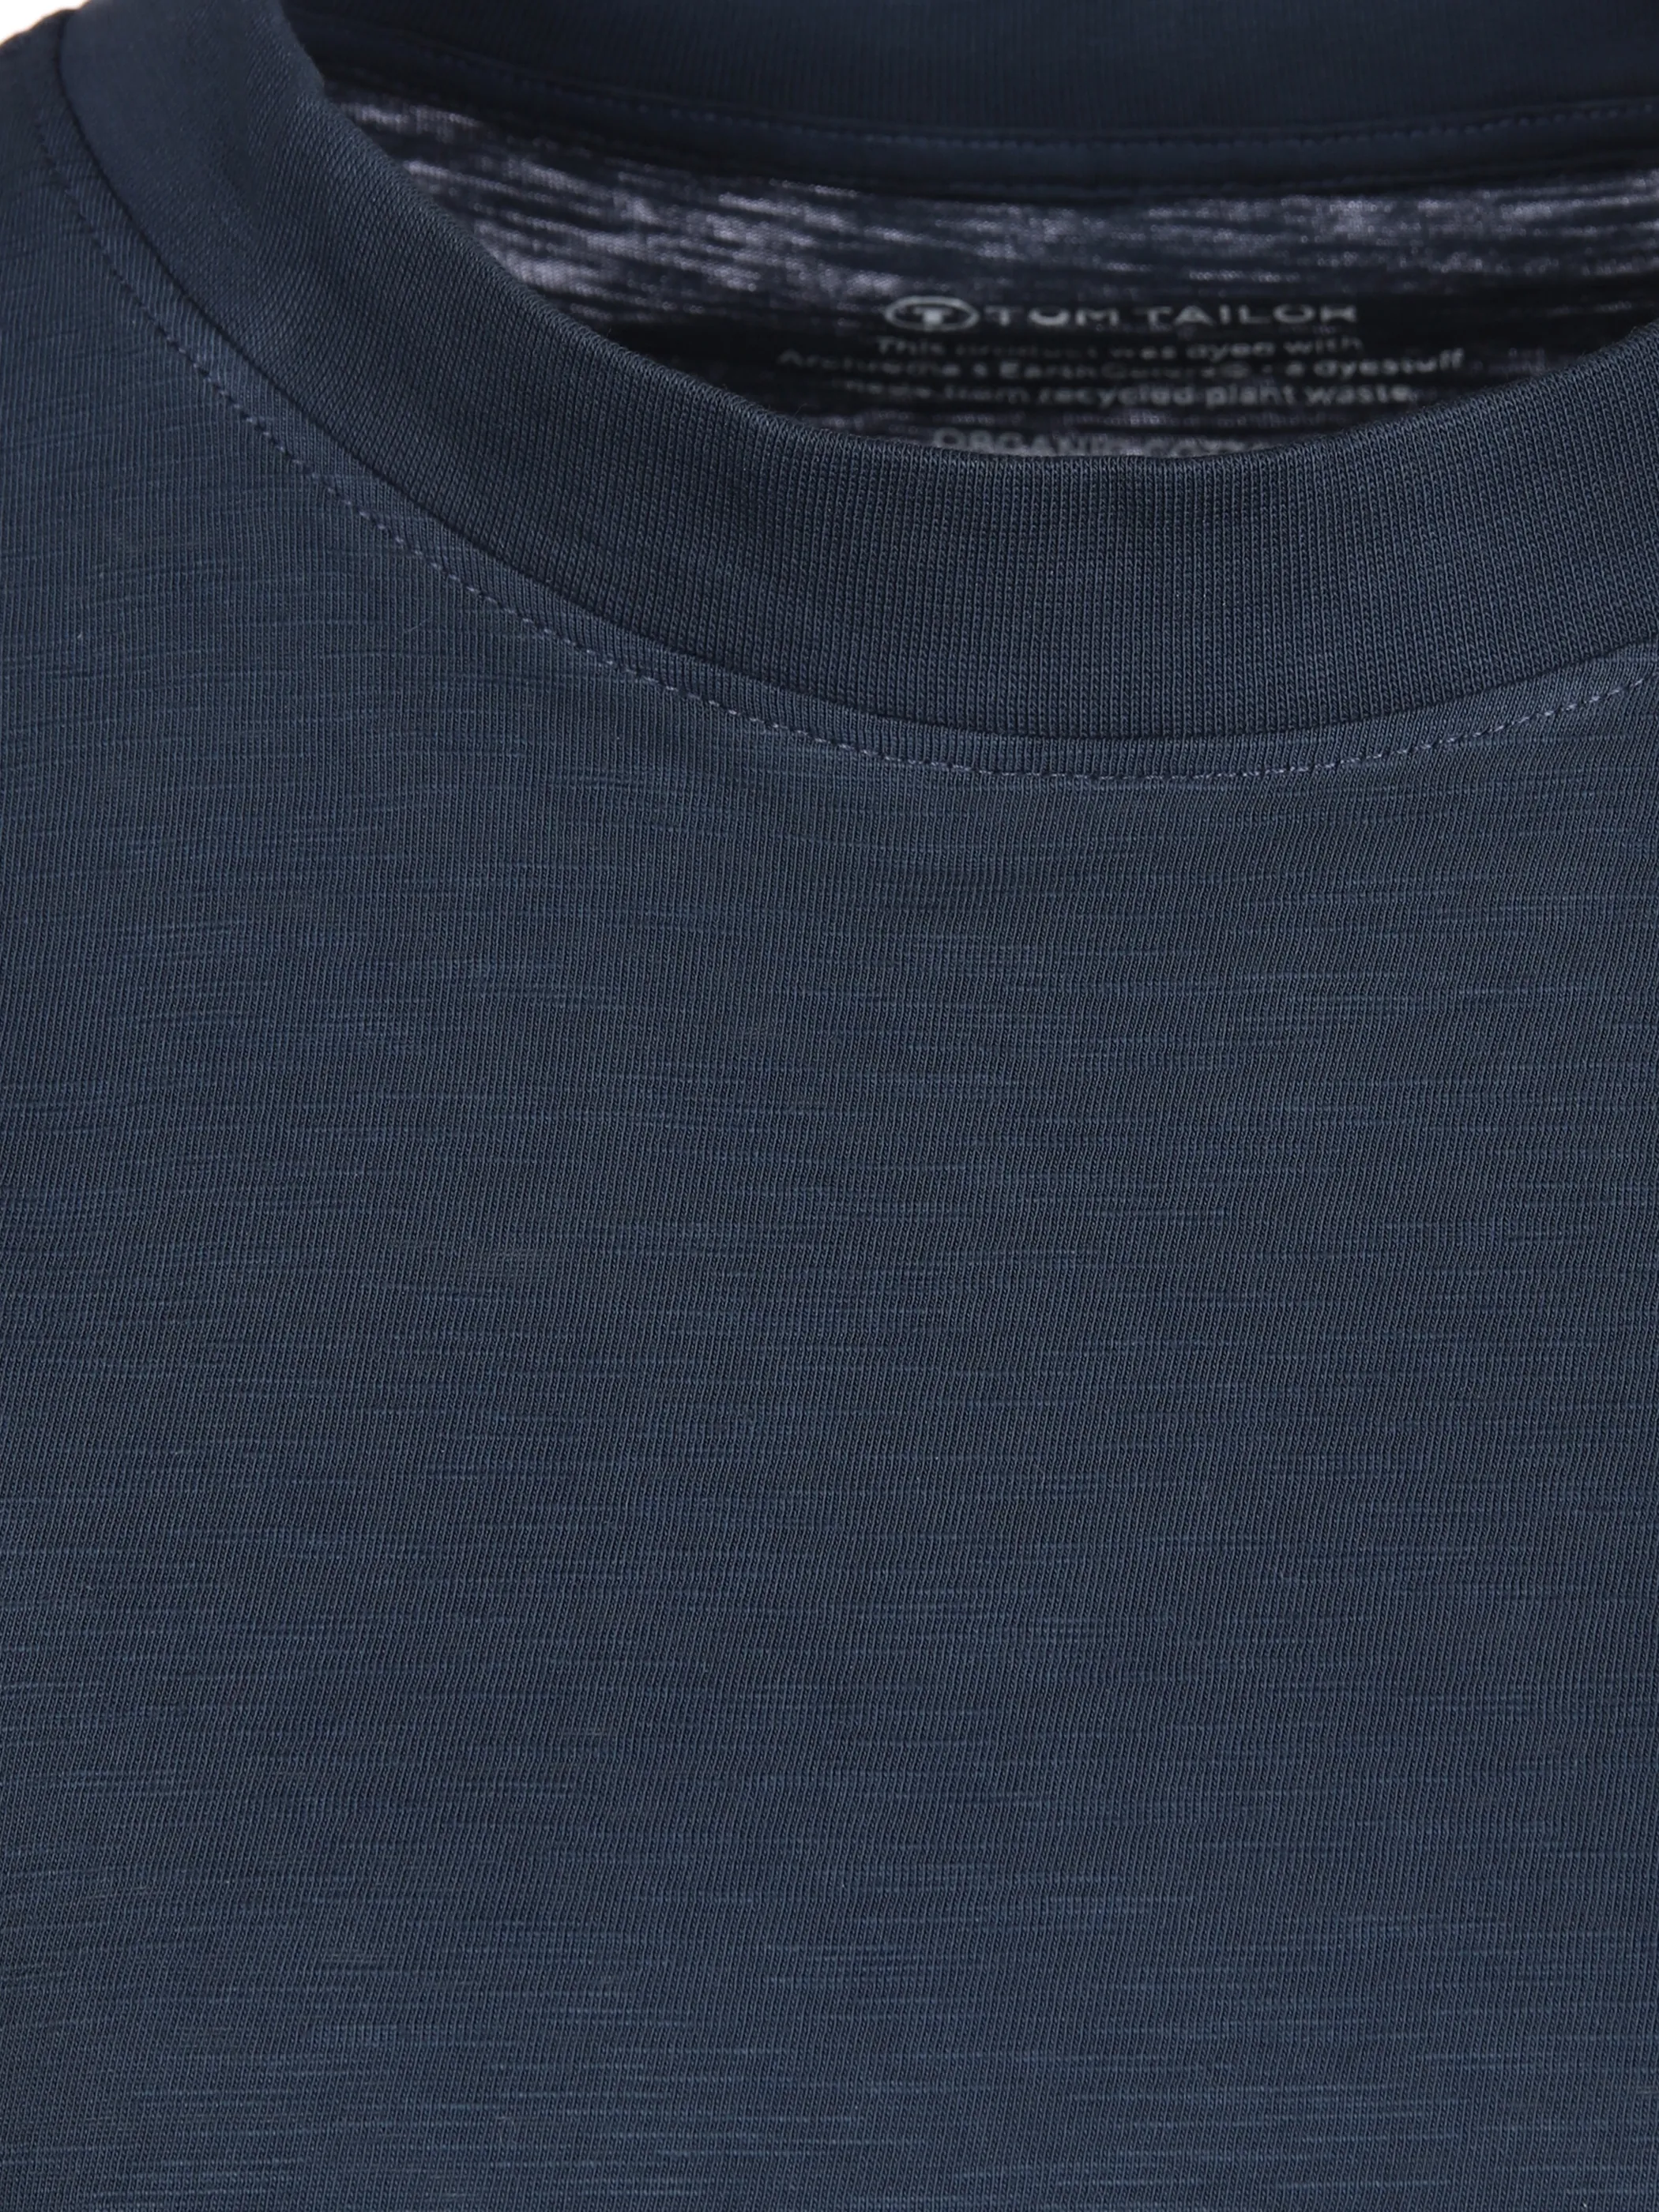 Tom Tailor 1031213 t-shirt natural dye Blau 865218 11758 3